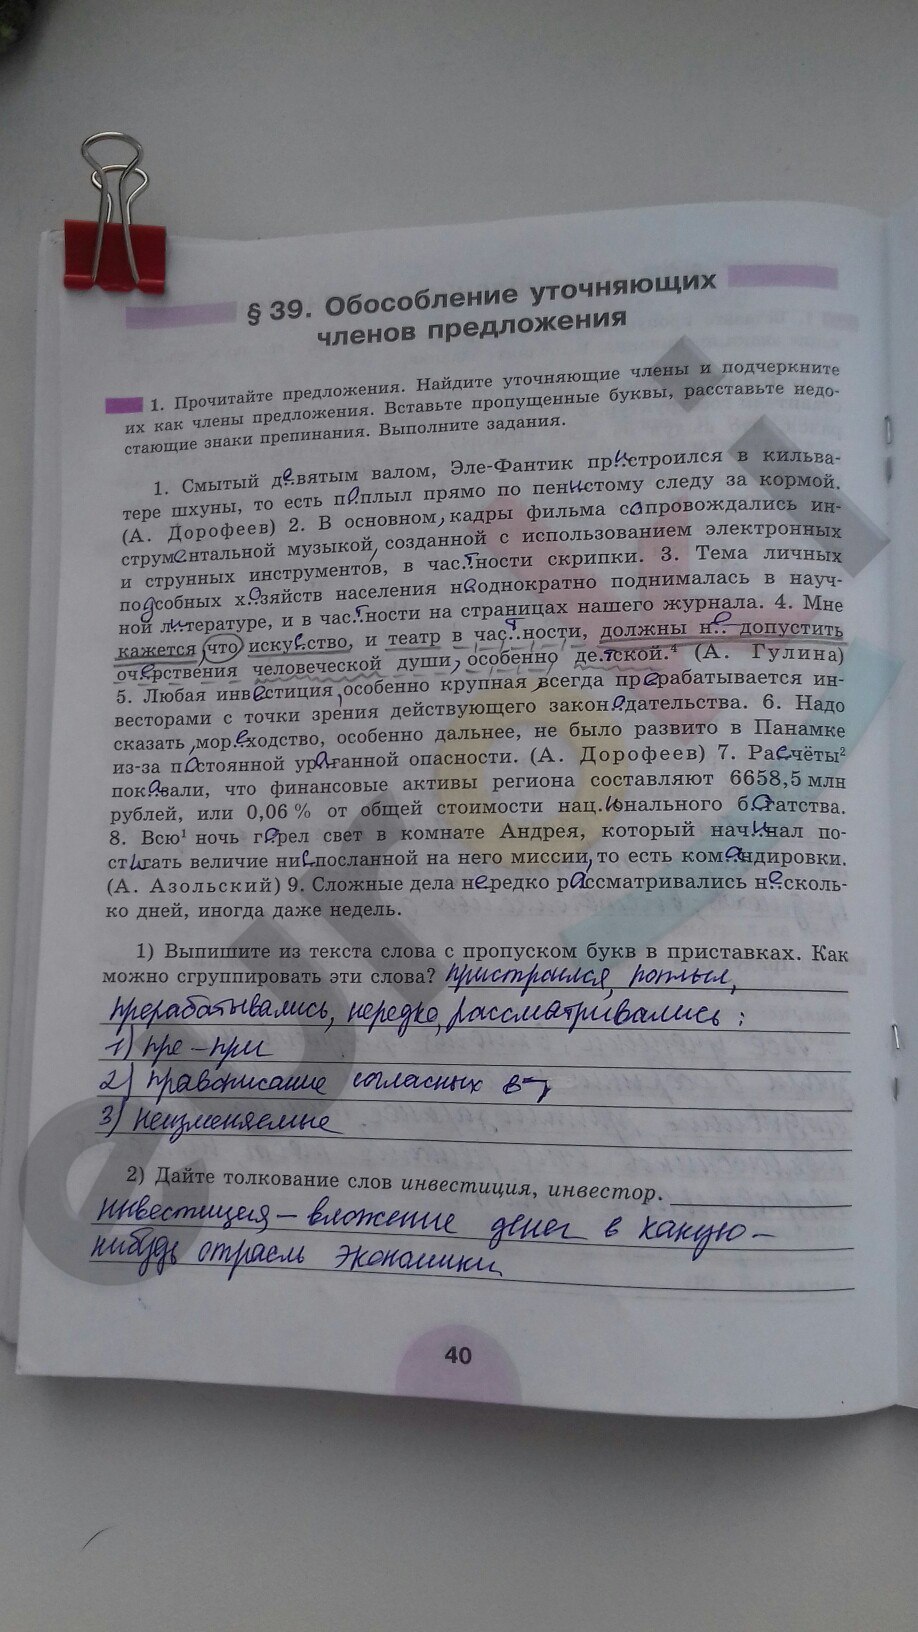 гдз 8 класс рабочая тетрадь часть 2 страница 40 русский язык Рыбченкова, Александрова